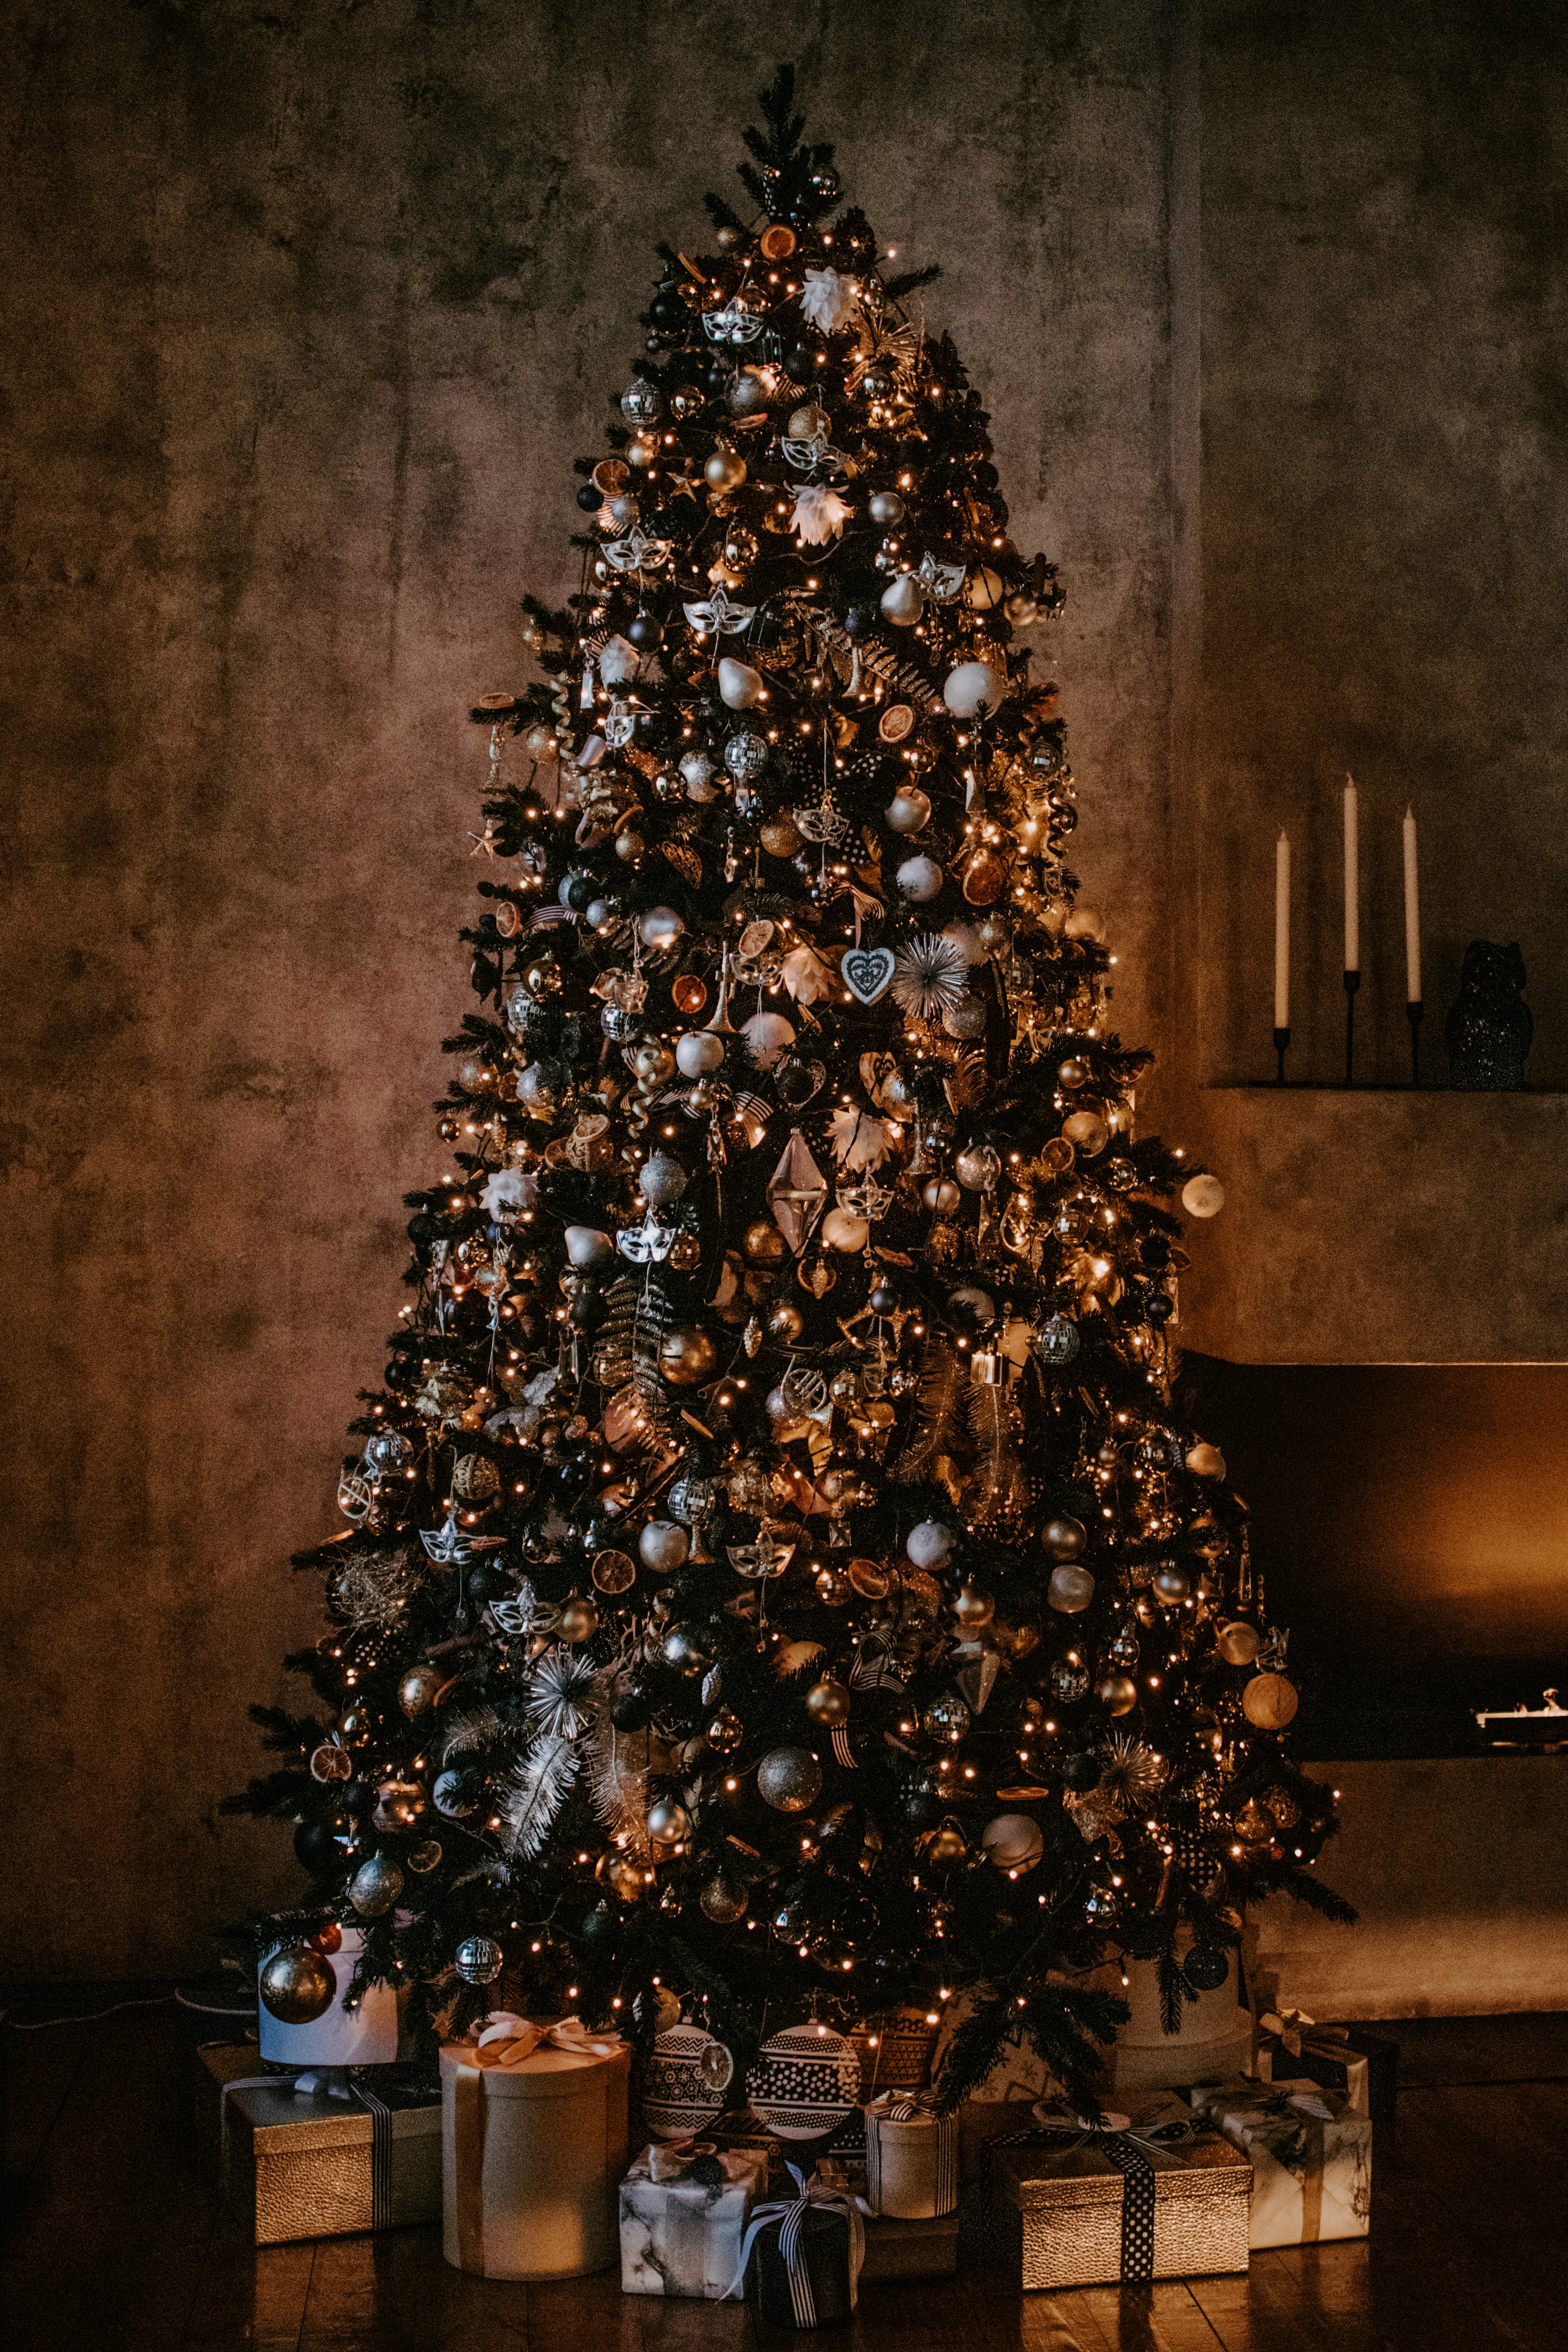 Christmas tree near wall photo – Free Christmas Image on Unsplash